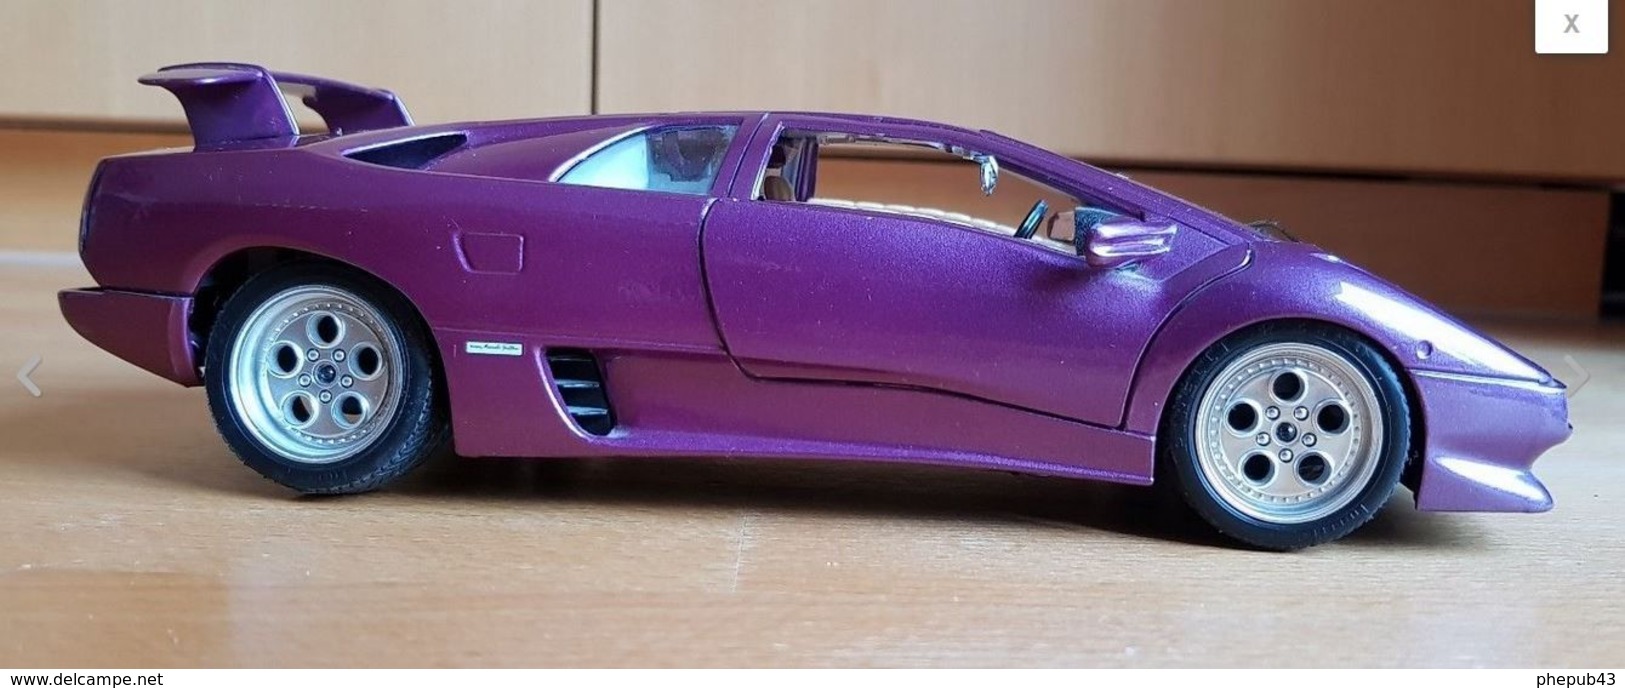 Lamborghini Diablo - 1990 - Purple - Burago (1:18)